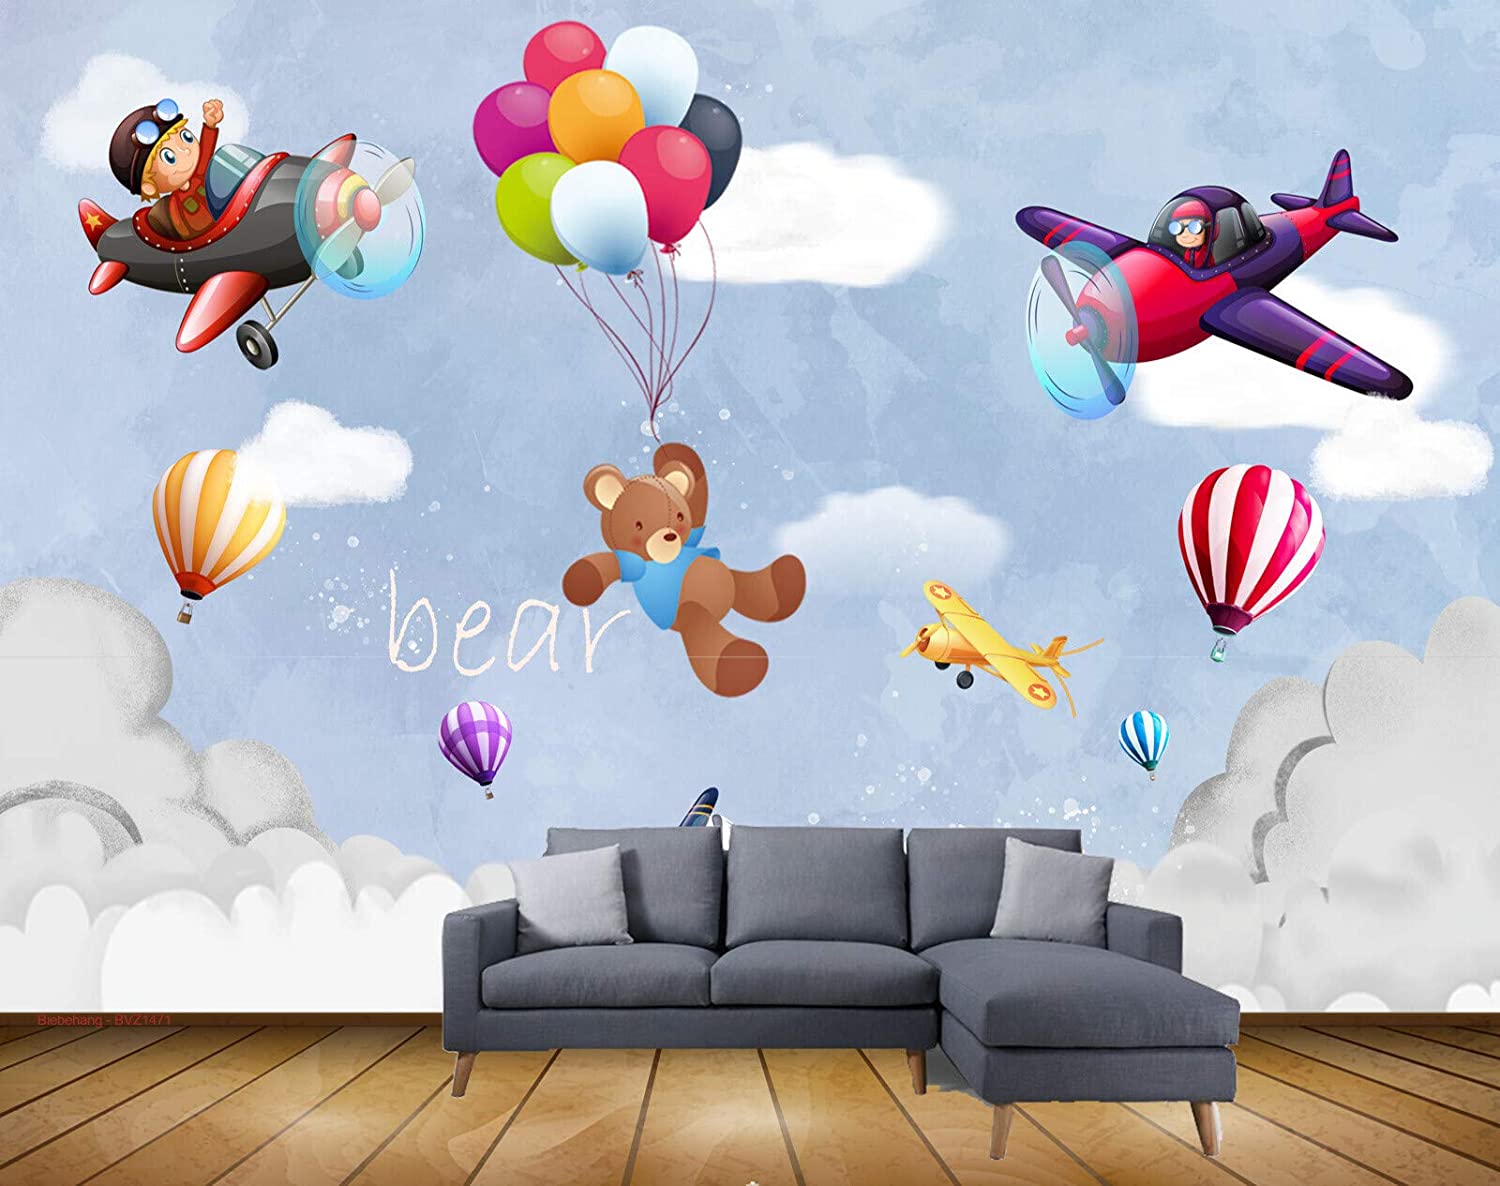 Beibehang exclusive bvz cute cartoon catchg balloons for bears children room bac hd d wallpaper cm x cm home improvement